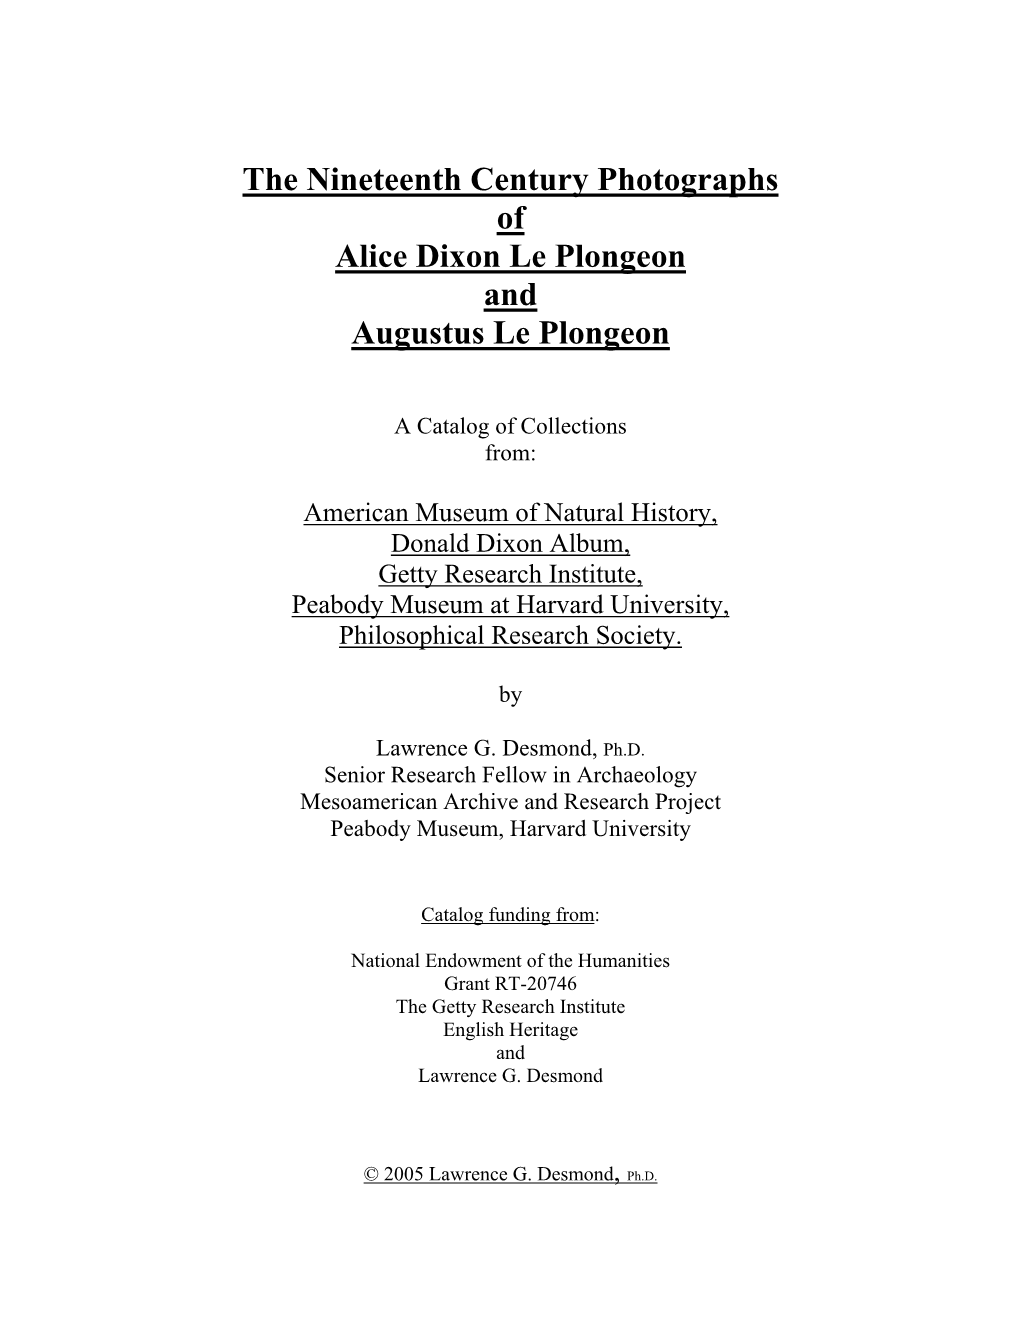 The Nineteenth Century Photographs of Alice Dixon Le Plongeon and Augustus Le Plongeon